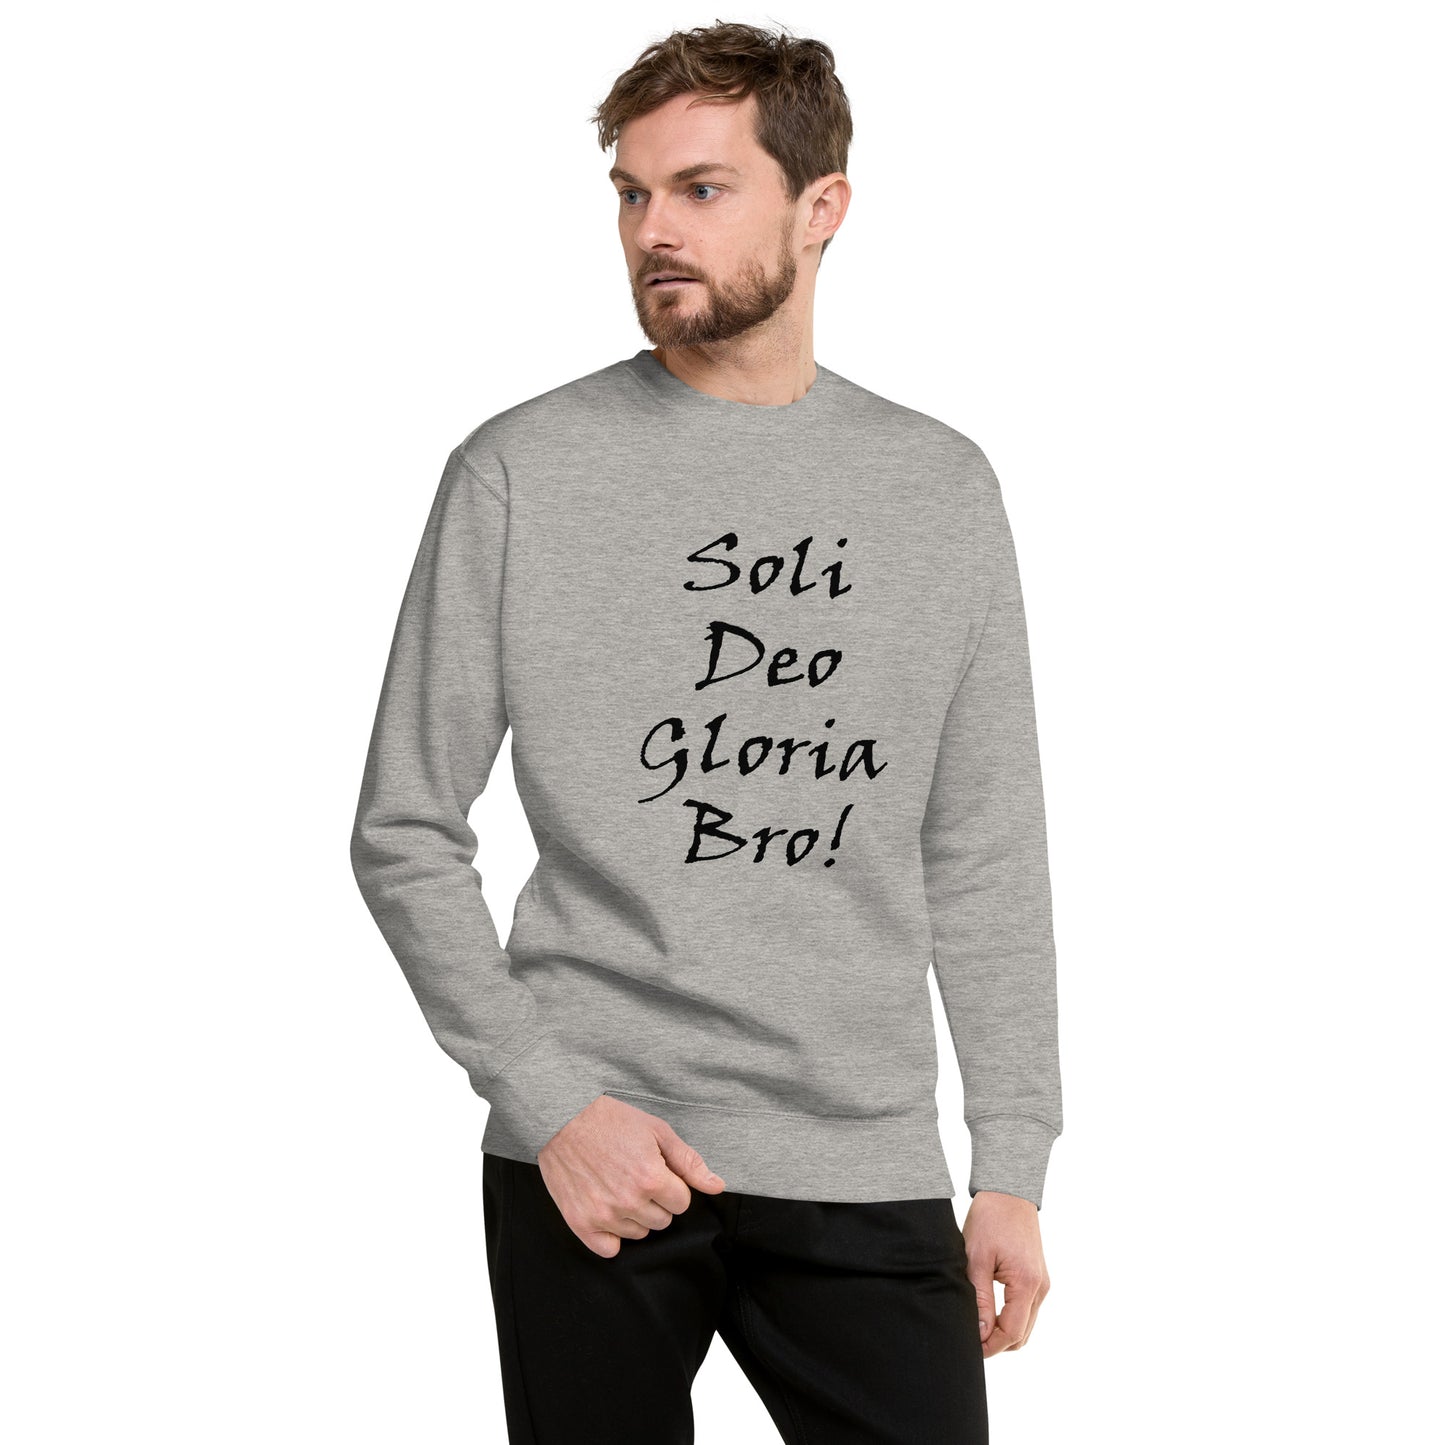 Soli Deo Gloria Bro! Unisex Sweatshirt - Solid Rock Designs | Christian Apparel